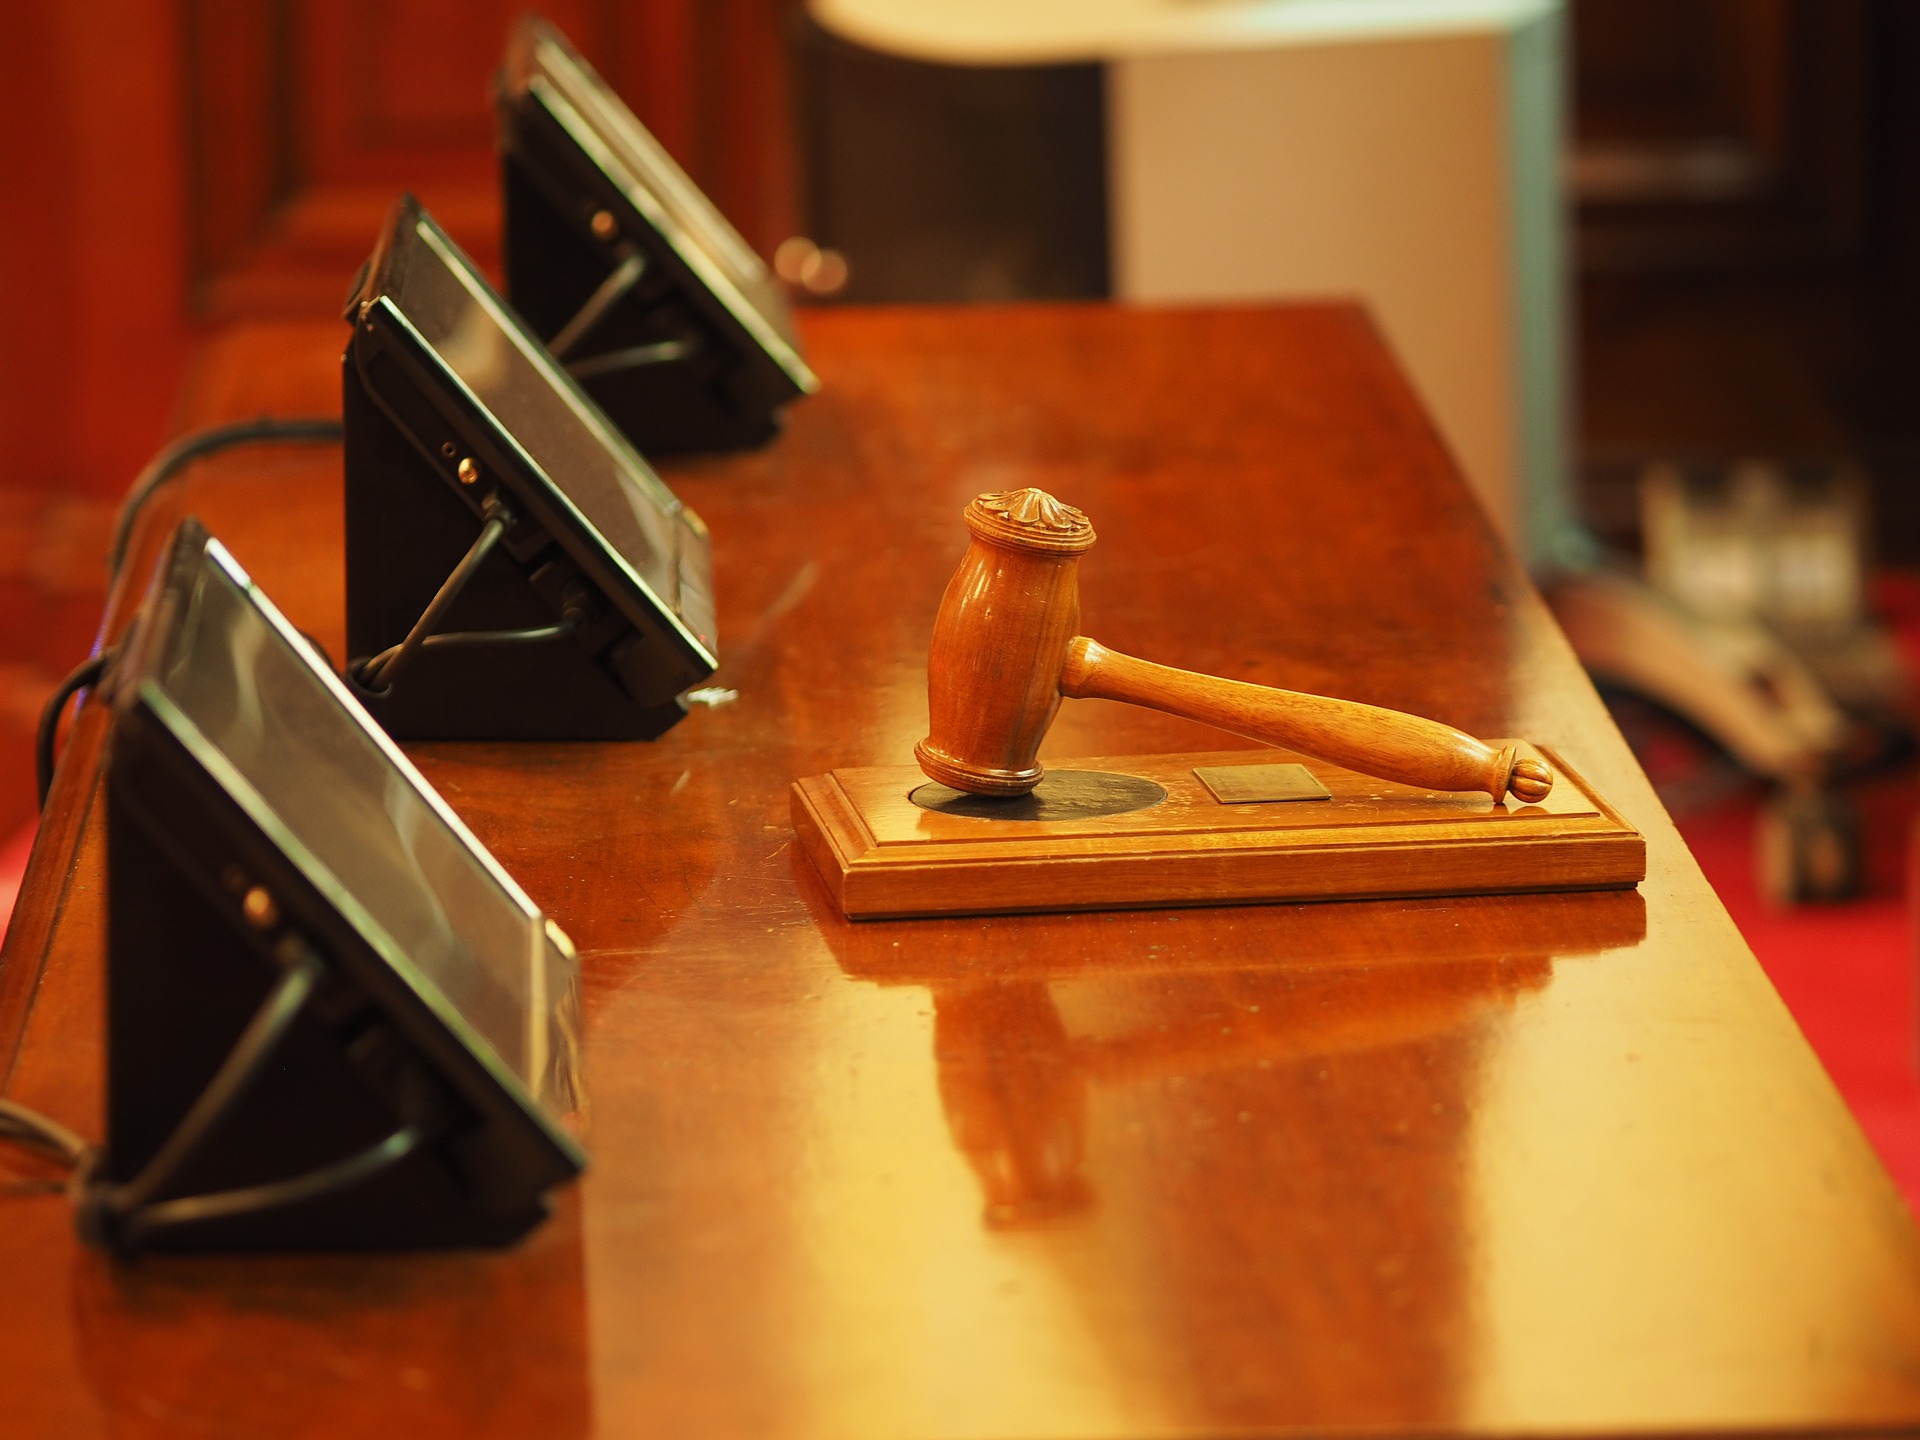 judge gavel on table